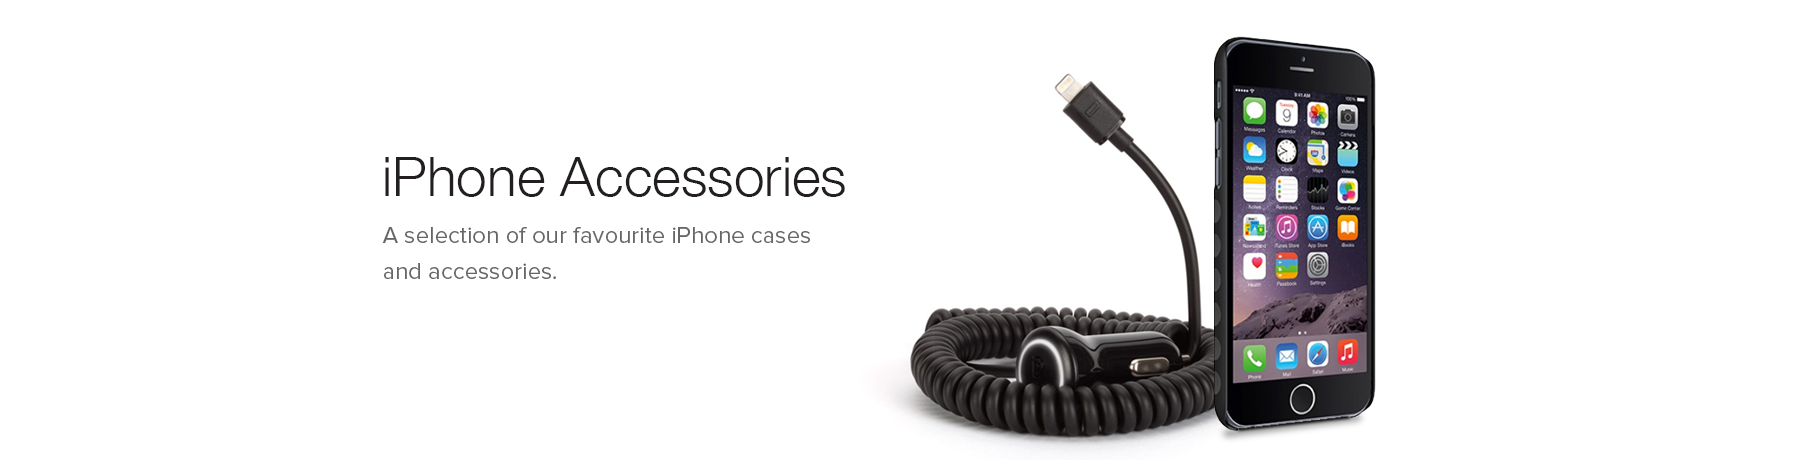 Accessories For iPhones